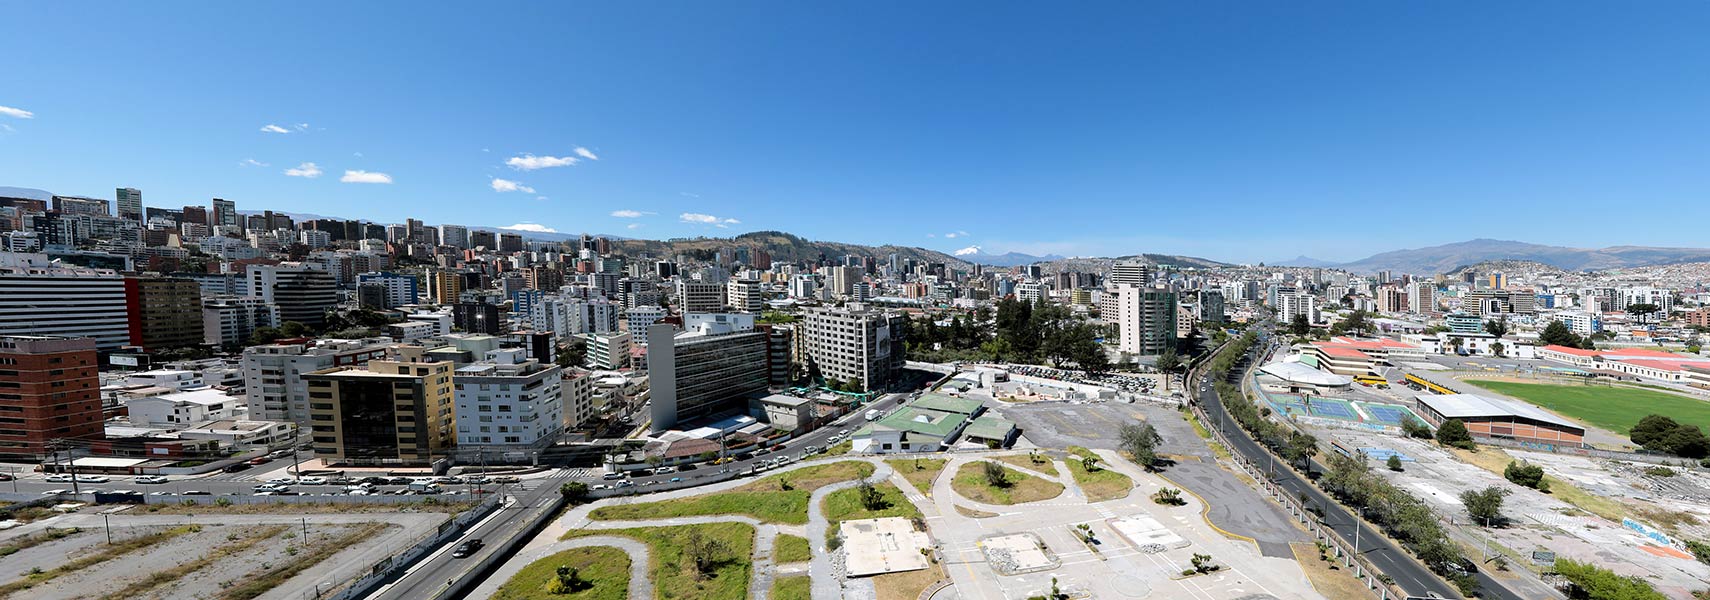 Panorama of Quito, capital city of Ecuador